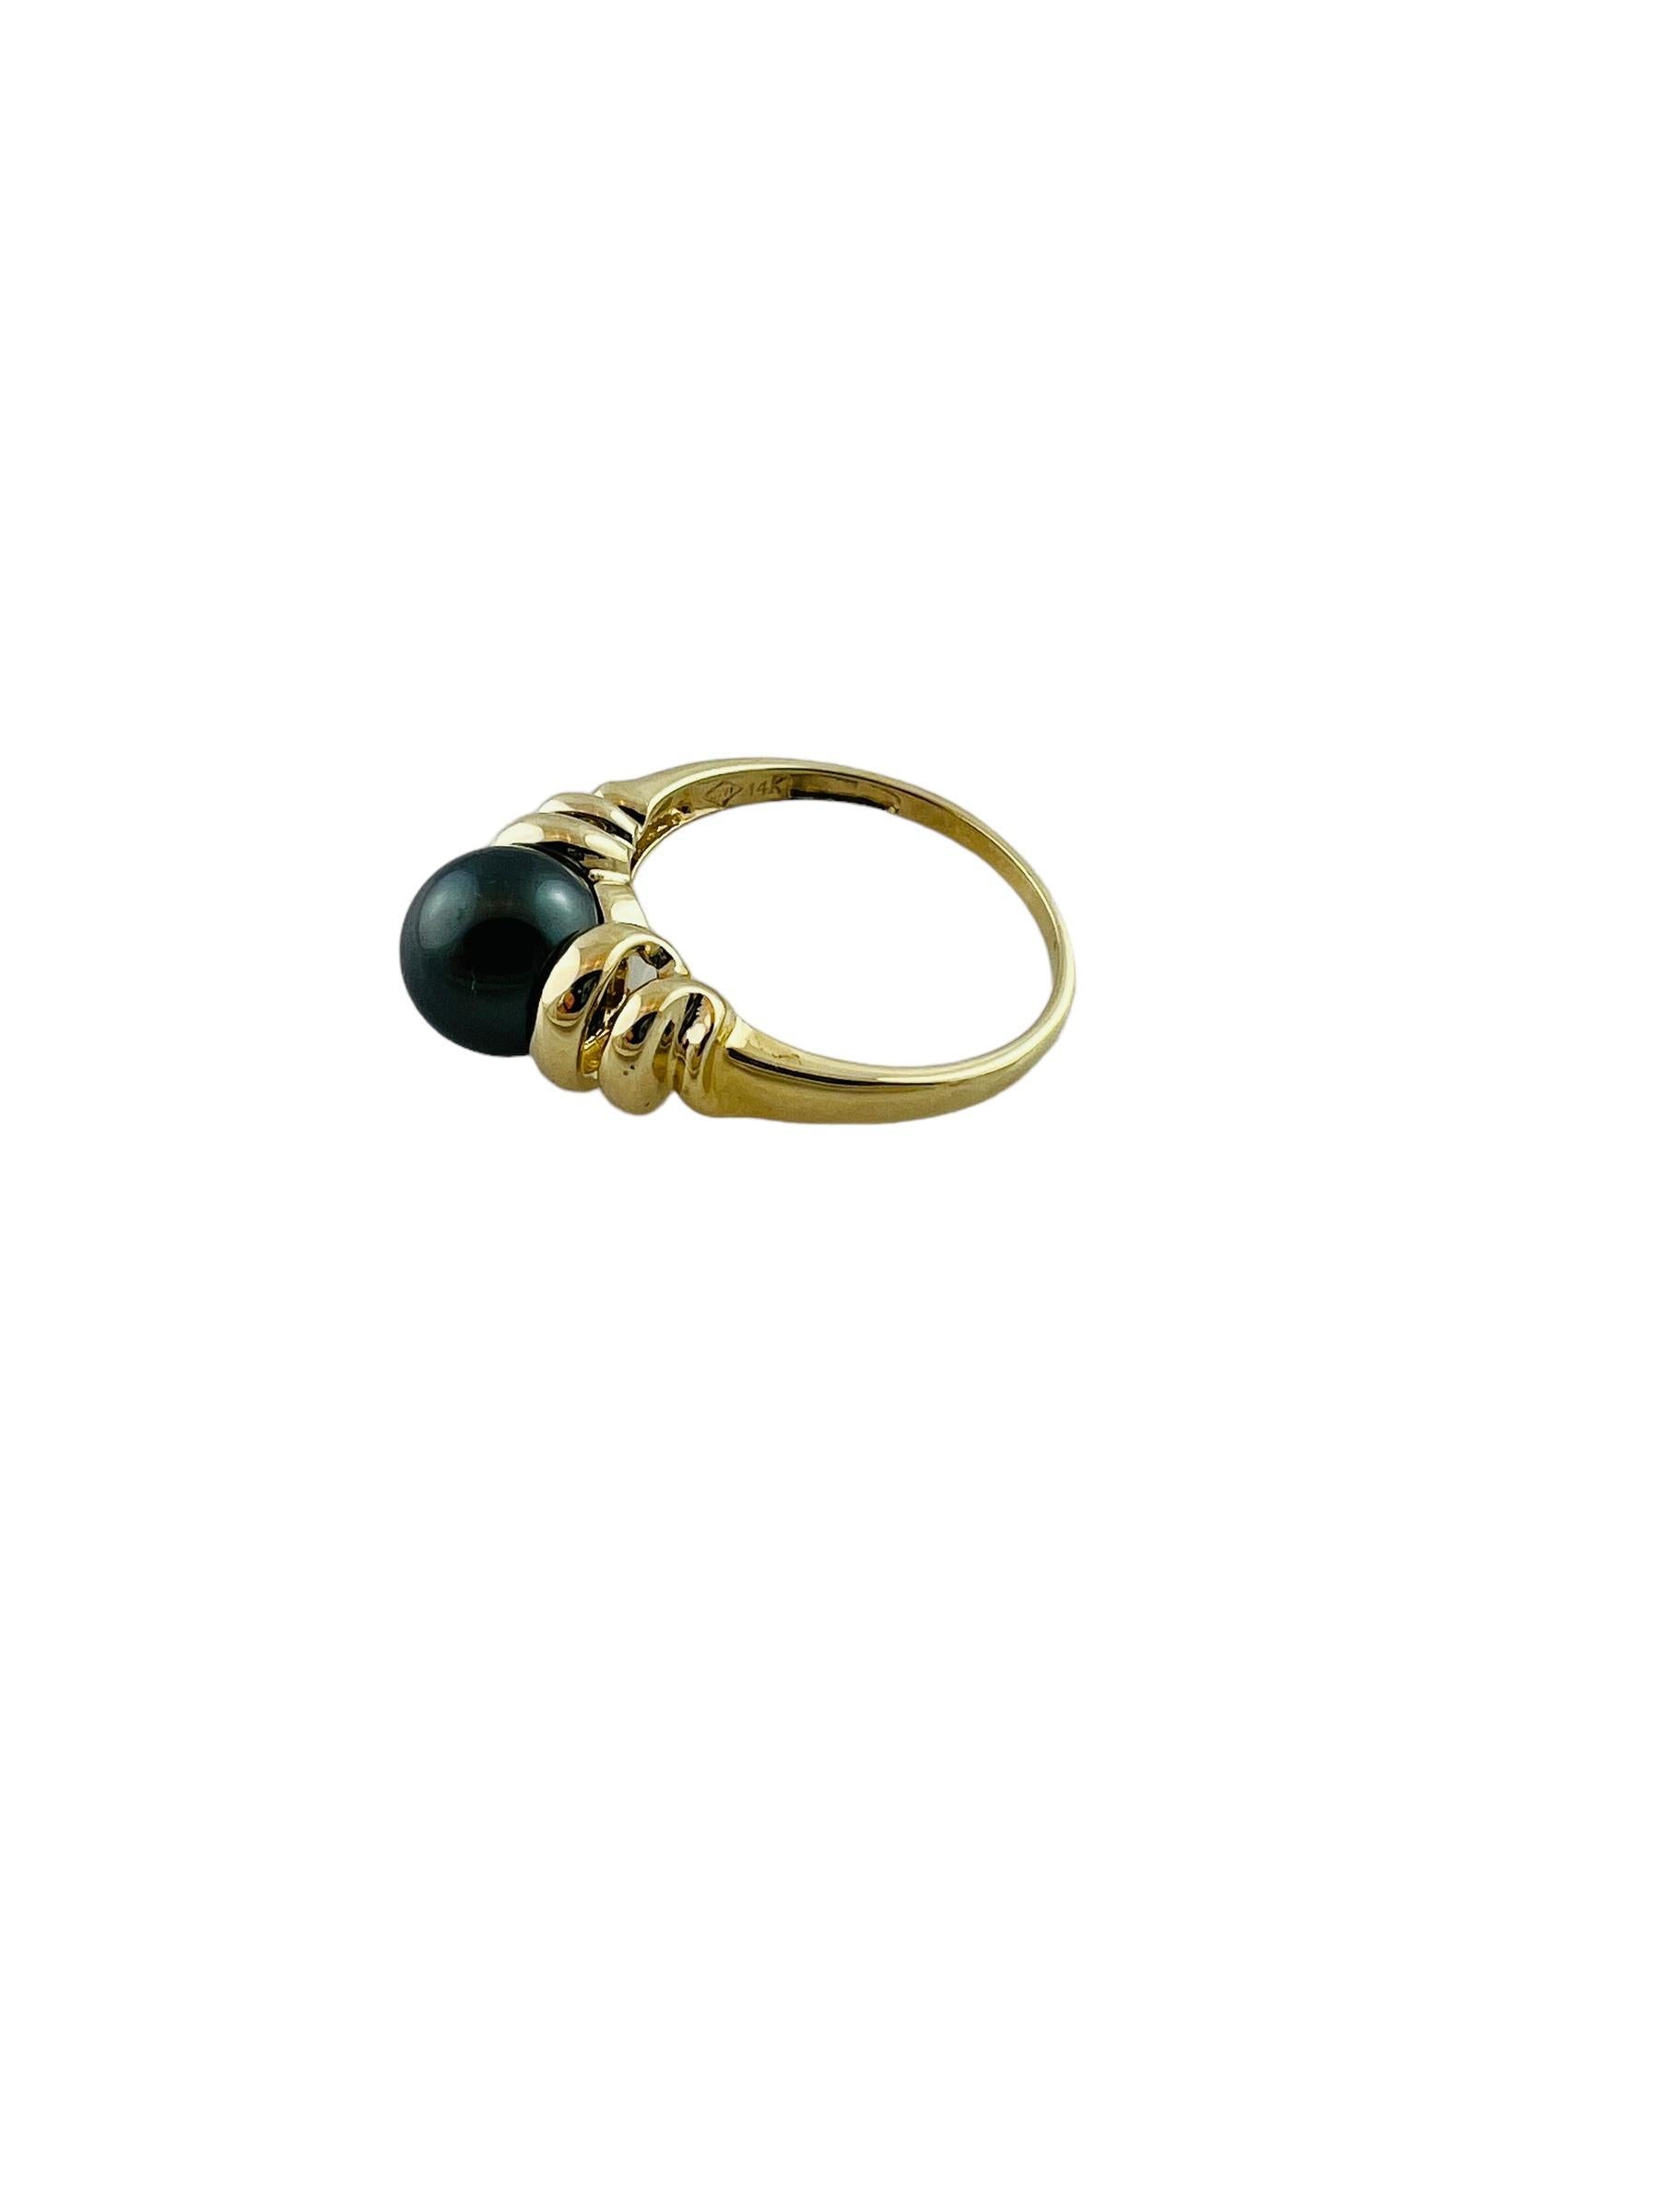 Women's 14K Yellow Gold Black Pearl Ring Size 7.25 #15671